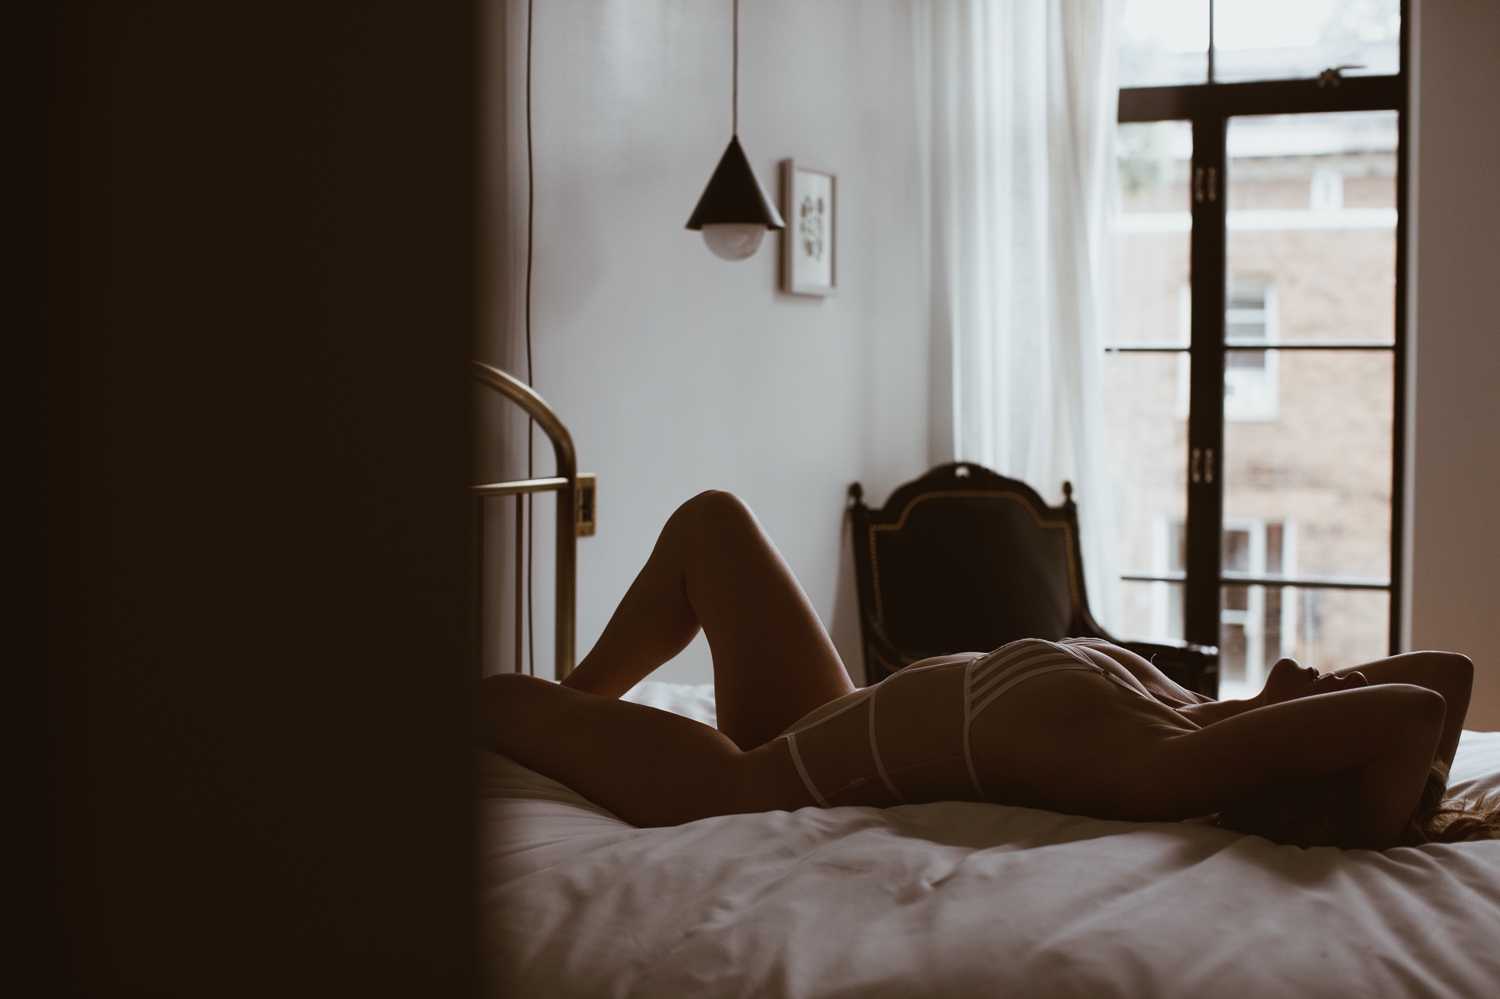 washington-dc-the-line-hotel-moody-dark-boudoir-photography 3.jpg